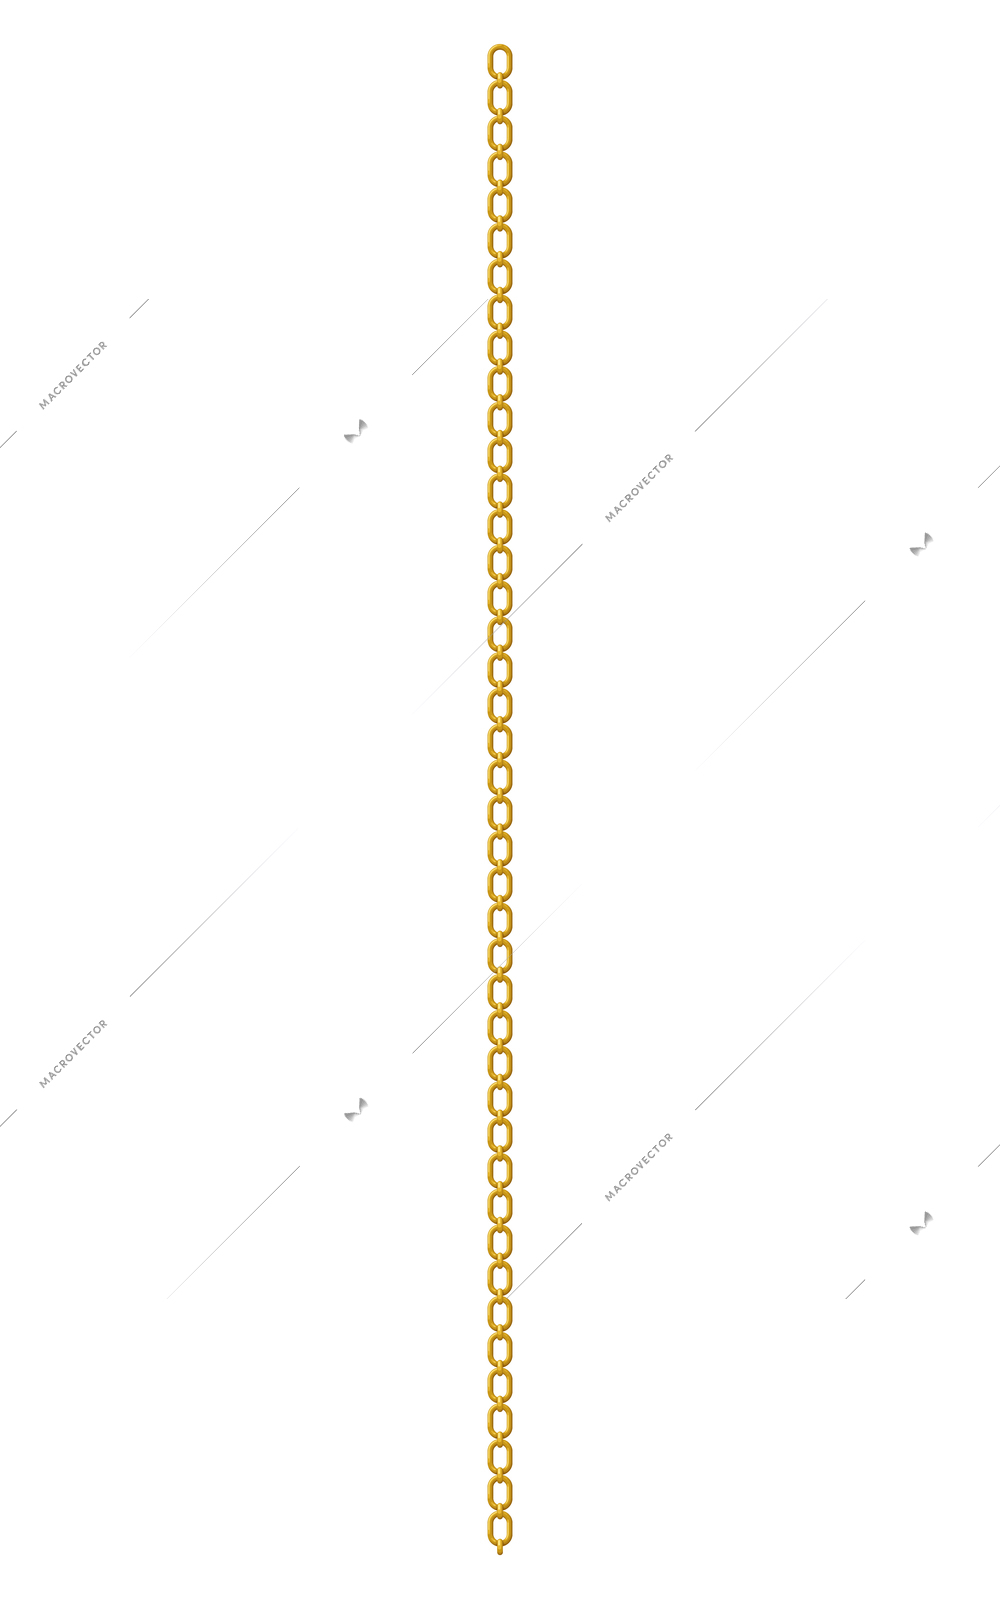 Realistic vertical golden chain belt on white background vector illustration